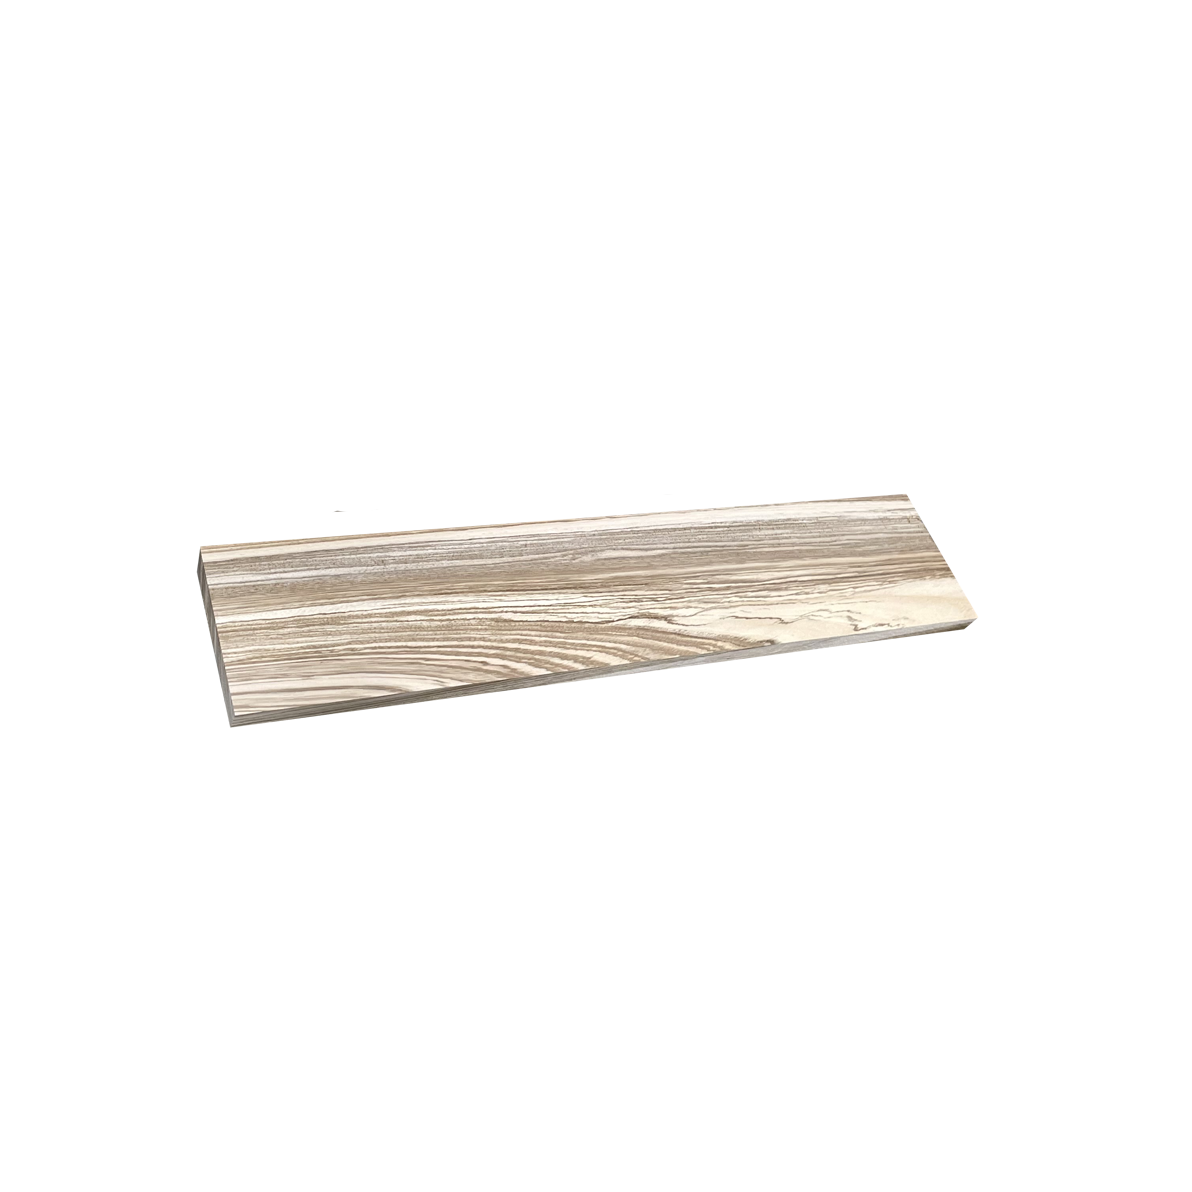 Zebrawood - Dimensional Lumber